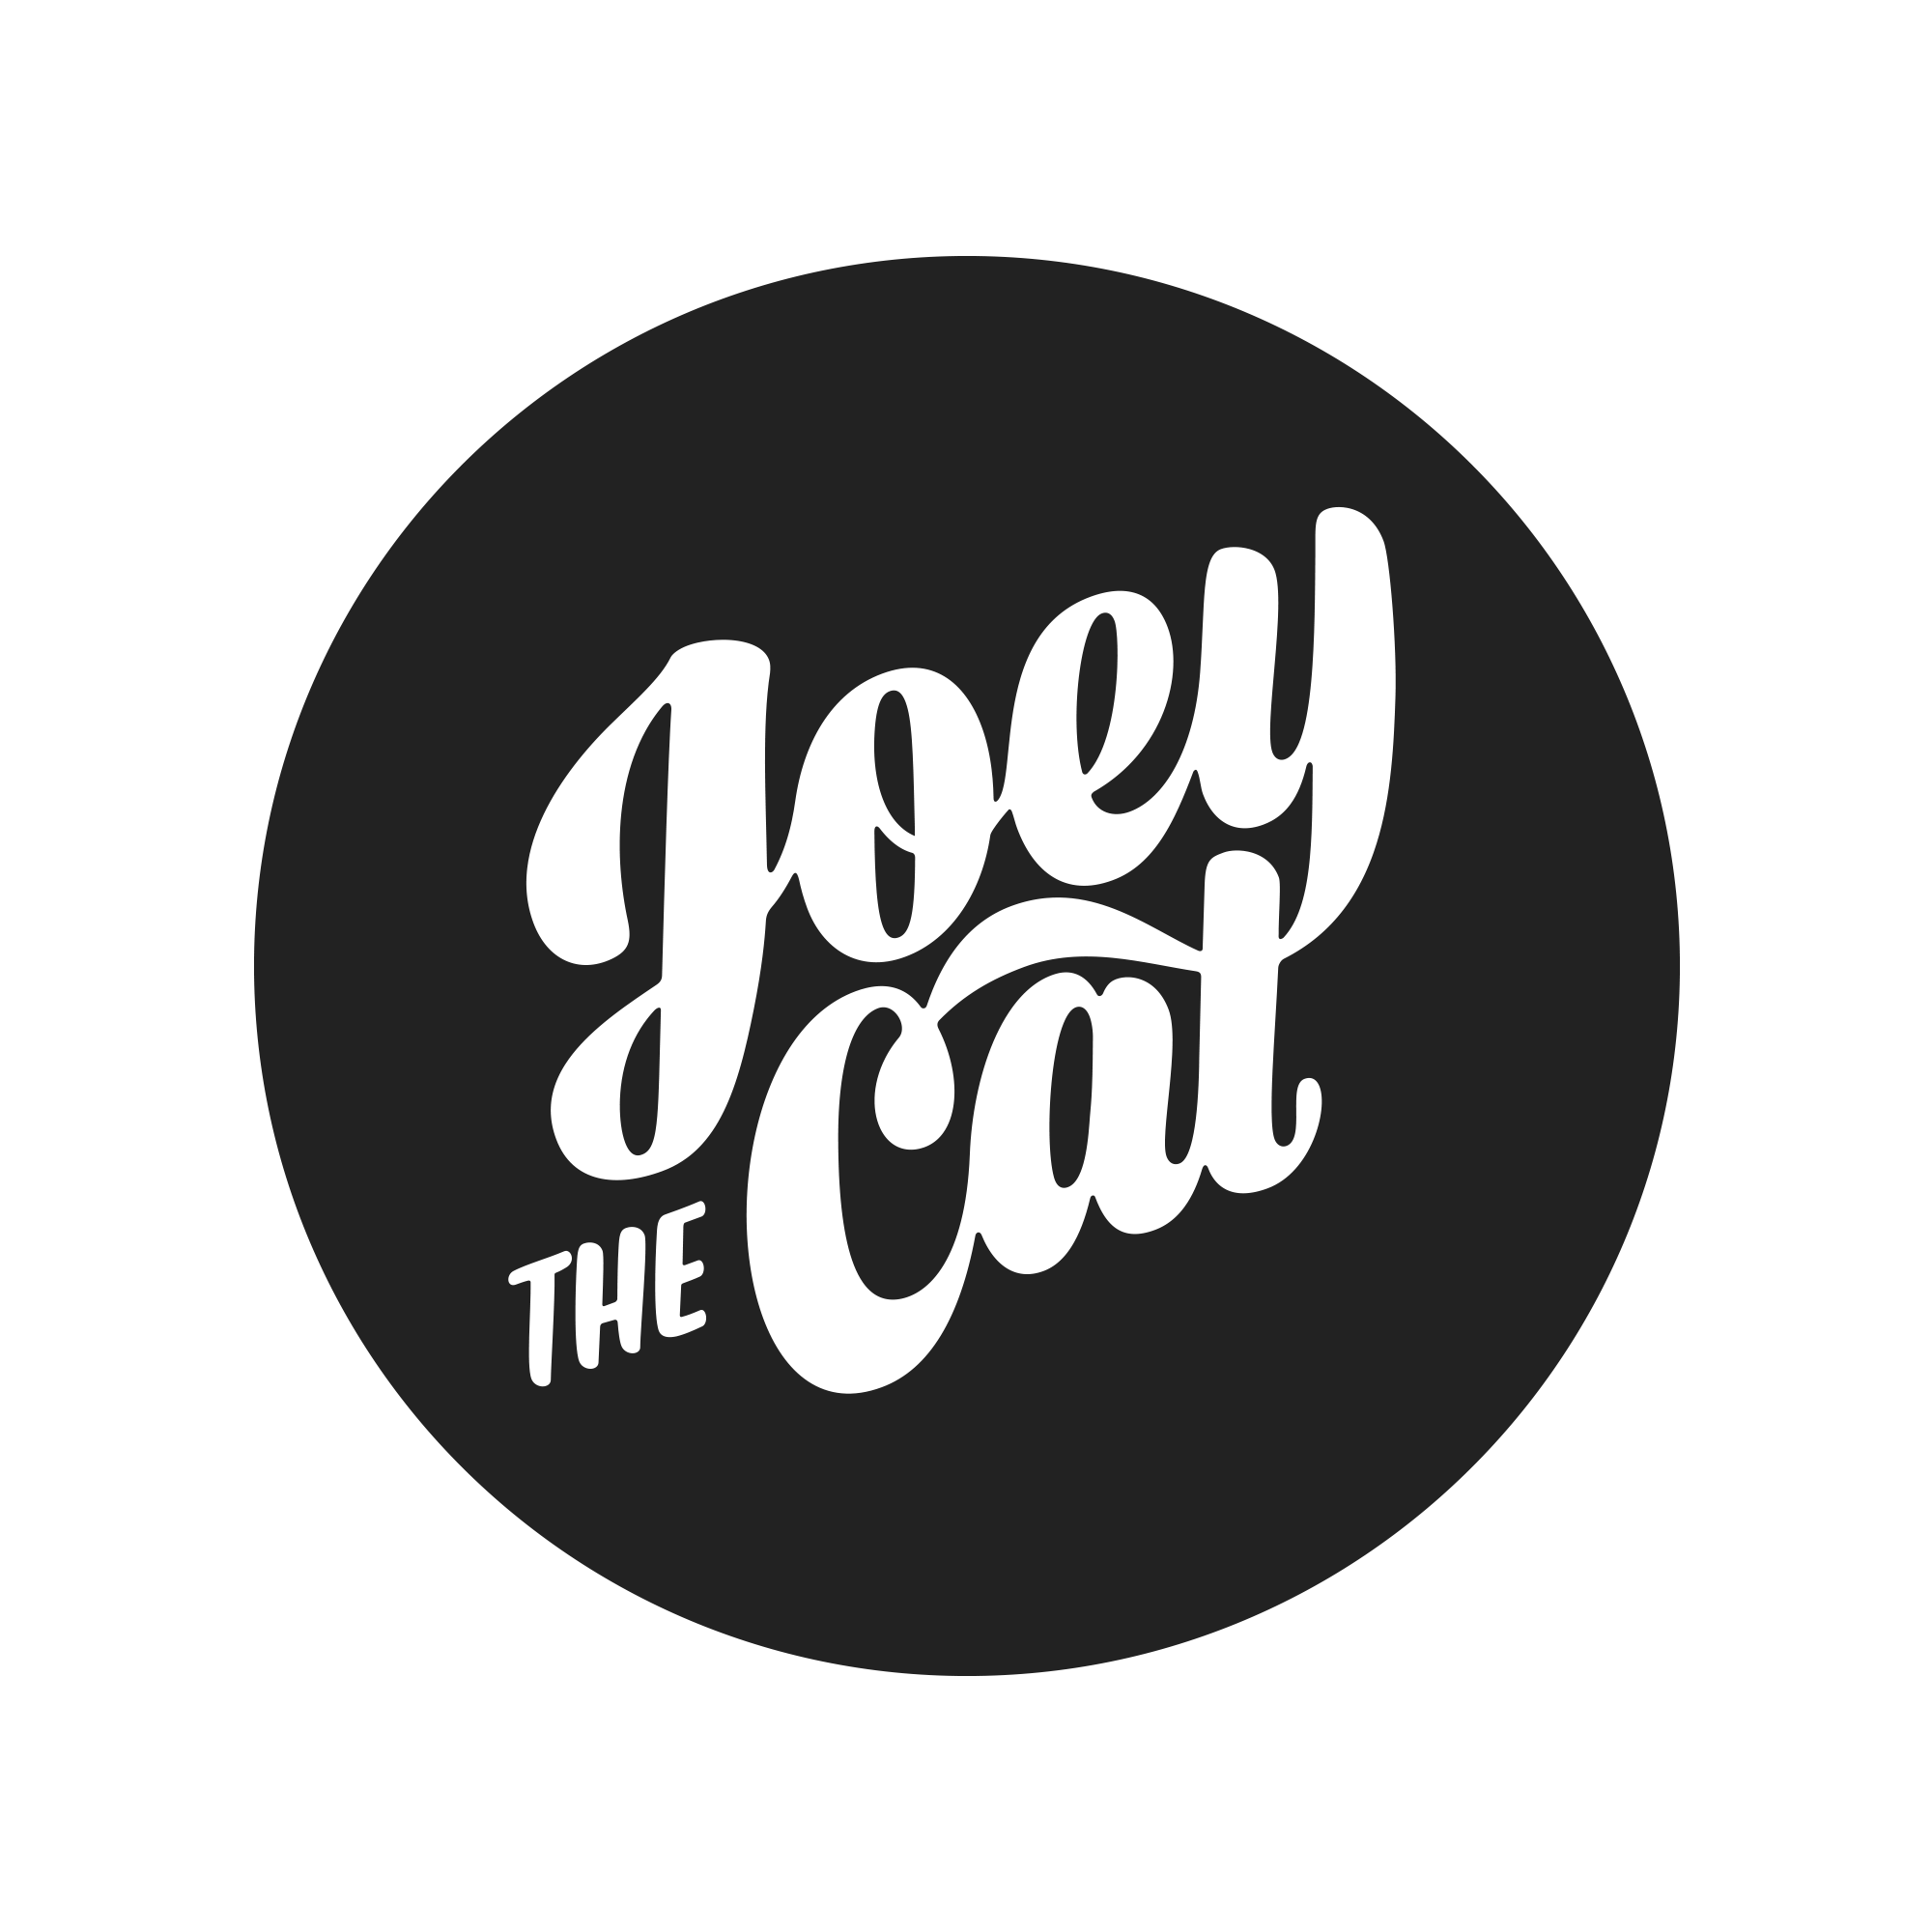 Joey the Cat